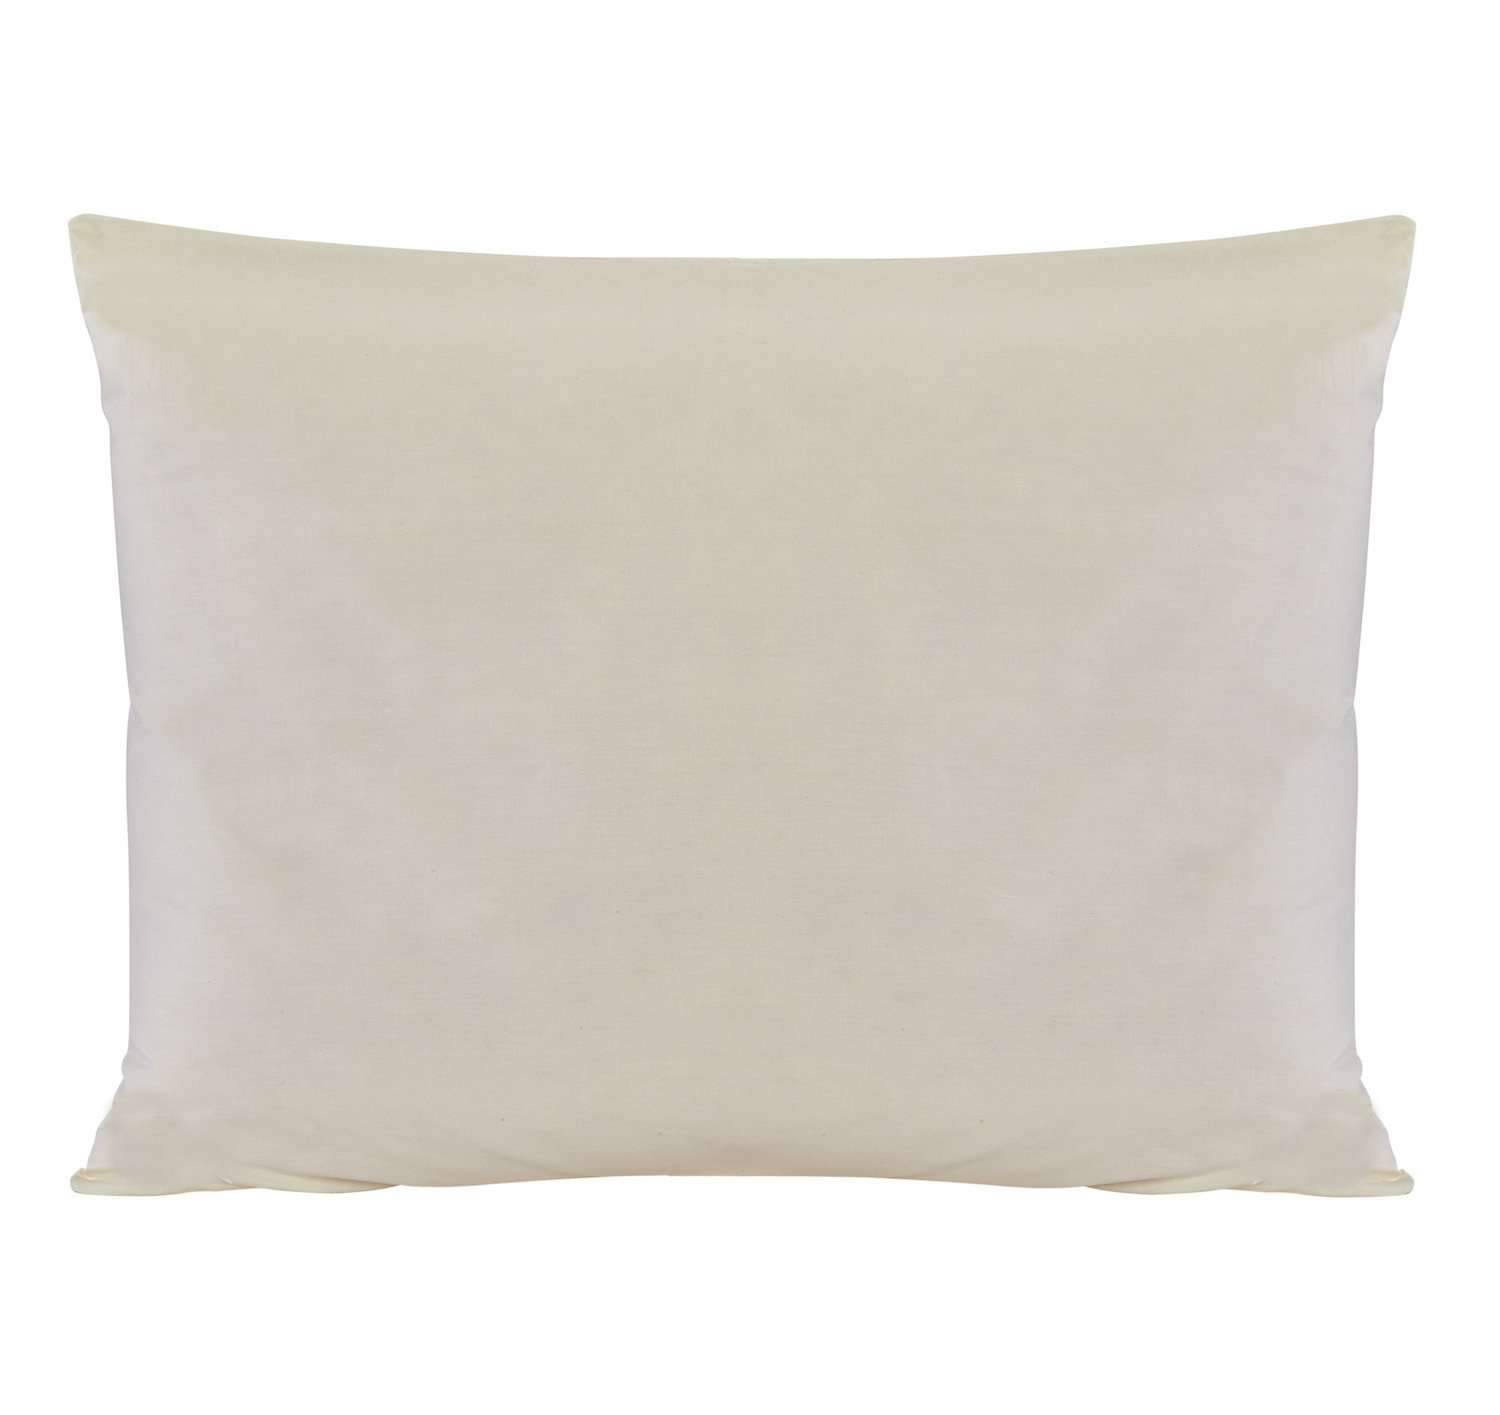 Pillows myWool Pillow™ by Sleep & Beyond Sleep & Beyond